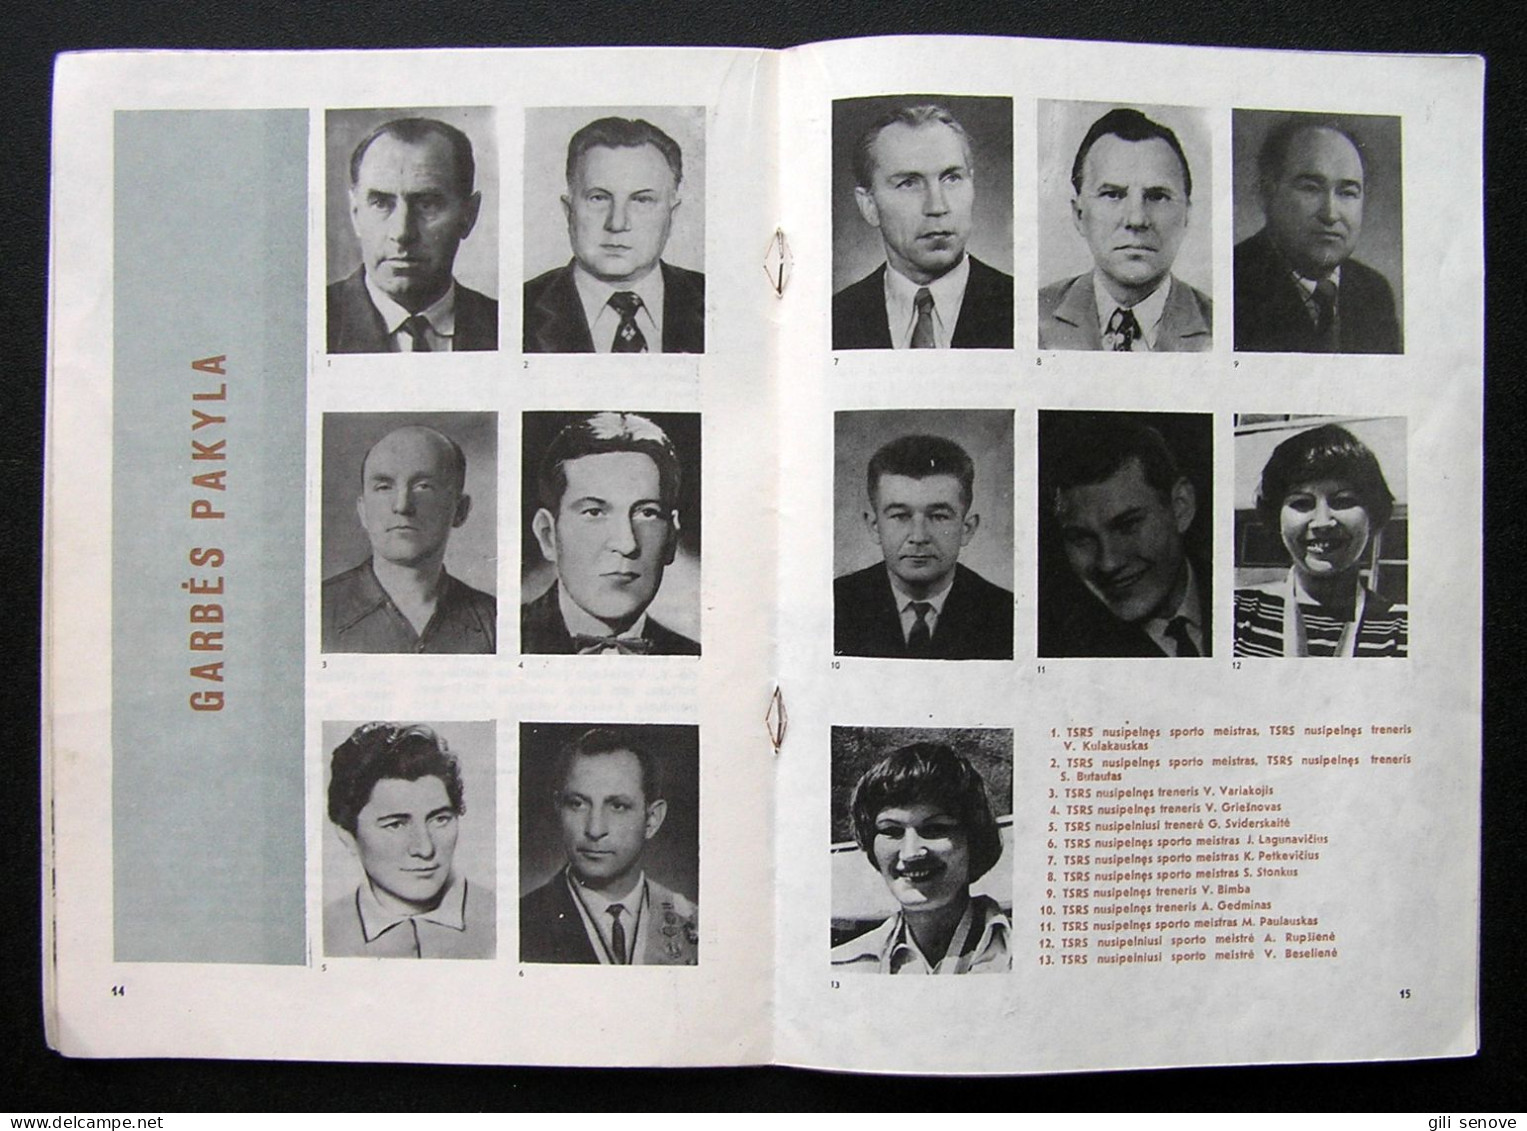 Lithuanian Book / Mūsų Krepšiniui - 60 By Zeliukas 1982 - Oude Boeken